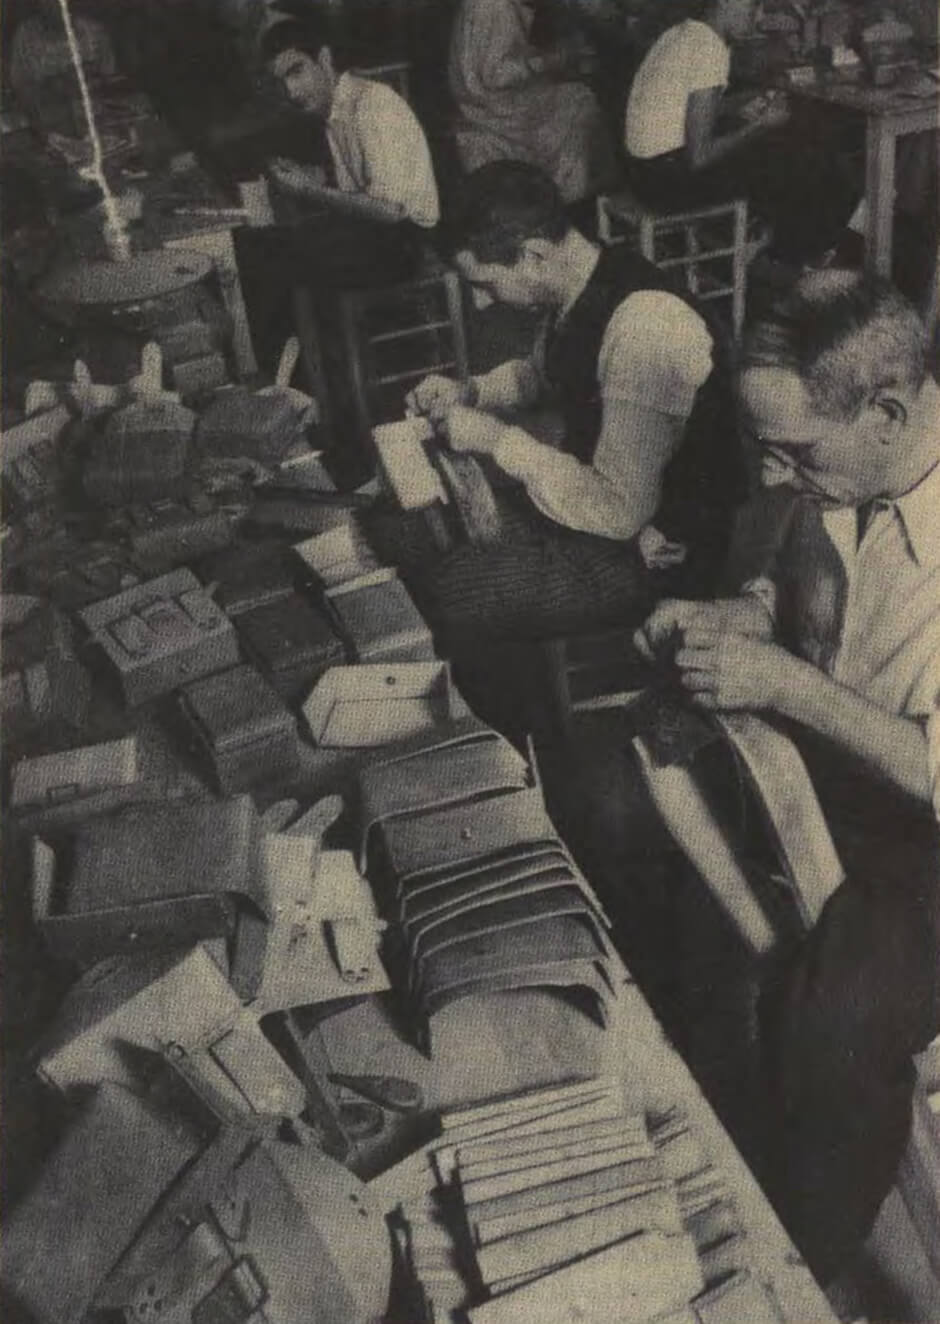 Art Canada Institute, Paraskeva Clark, Spanish factory workers, c. 1936